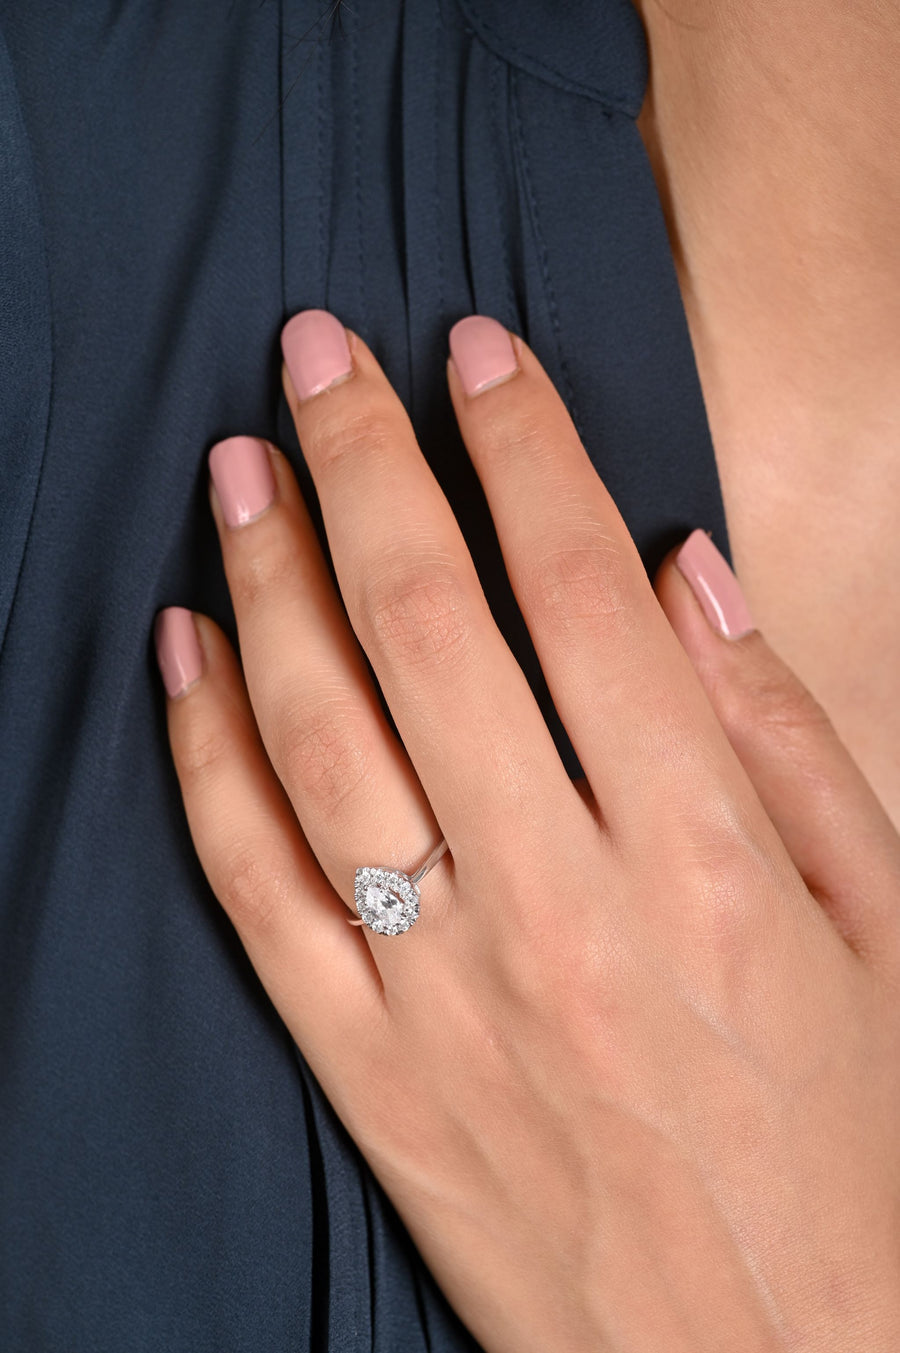 Art Deco Pear Moissanite Engagement Ring Vintage Rose Gold Ring Baguette  Diamond Halo Antique Unique Bridal Ring Anniversary Promise - Etsy | Pear  moissanite engagement ring, Art deco diamond rings, Vintage engagement rings